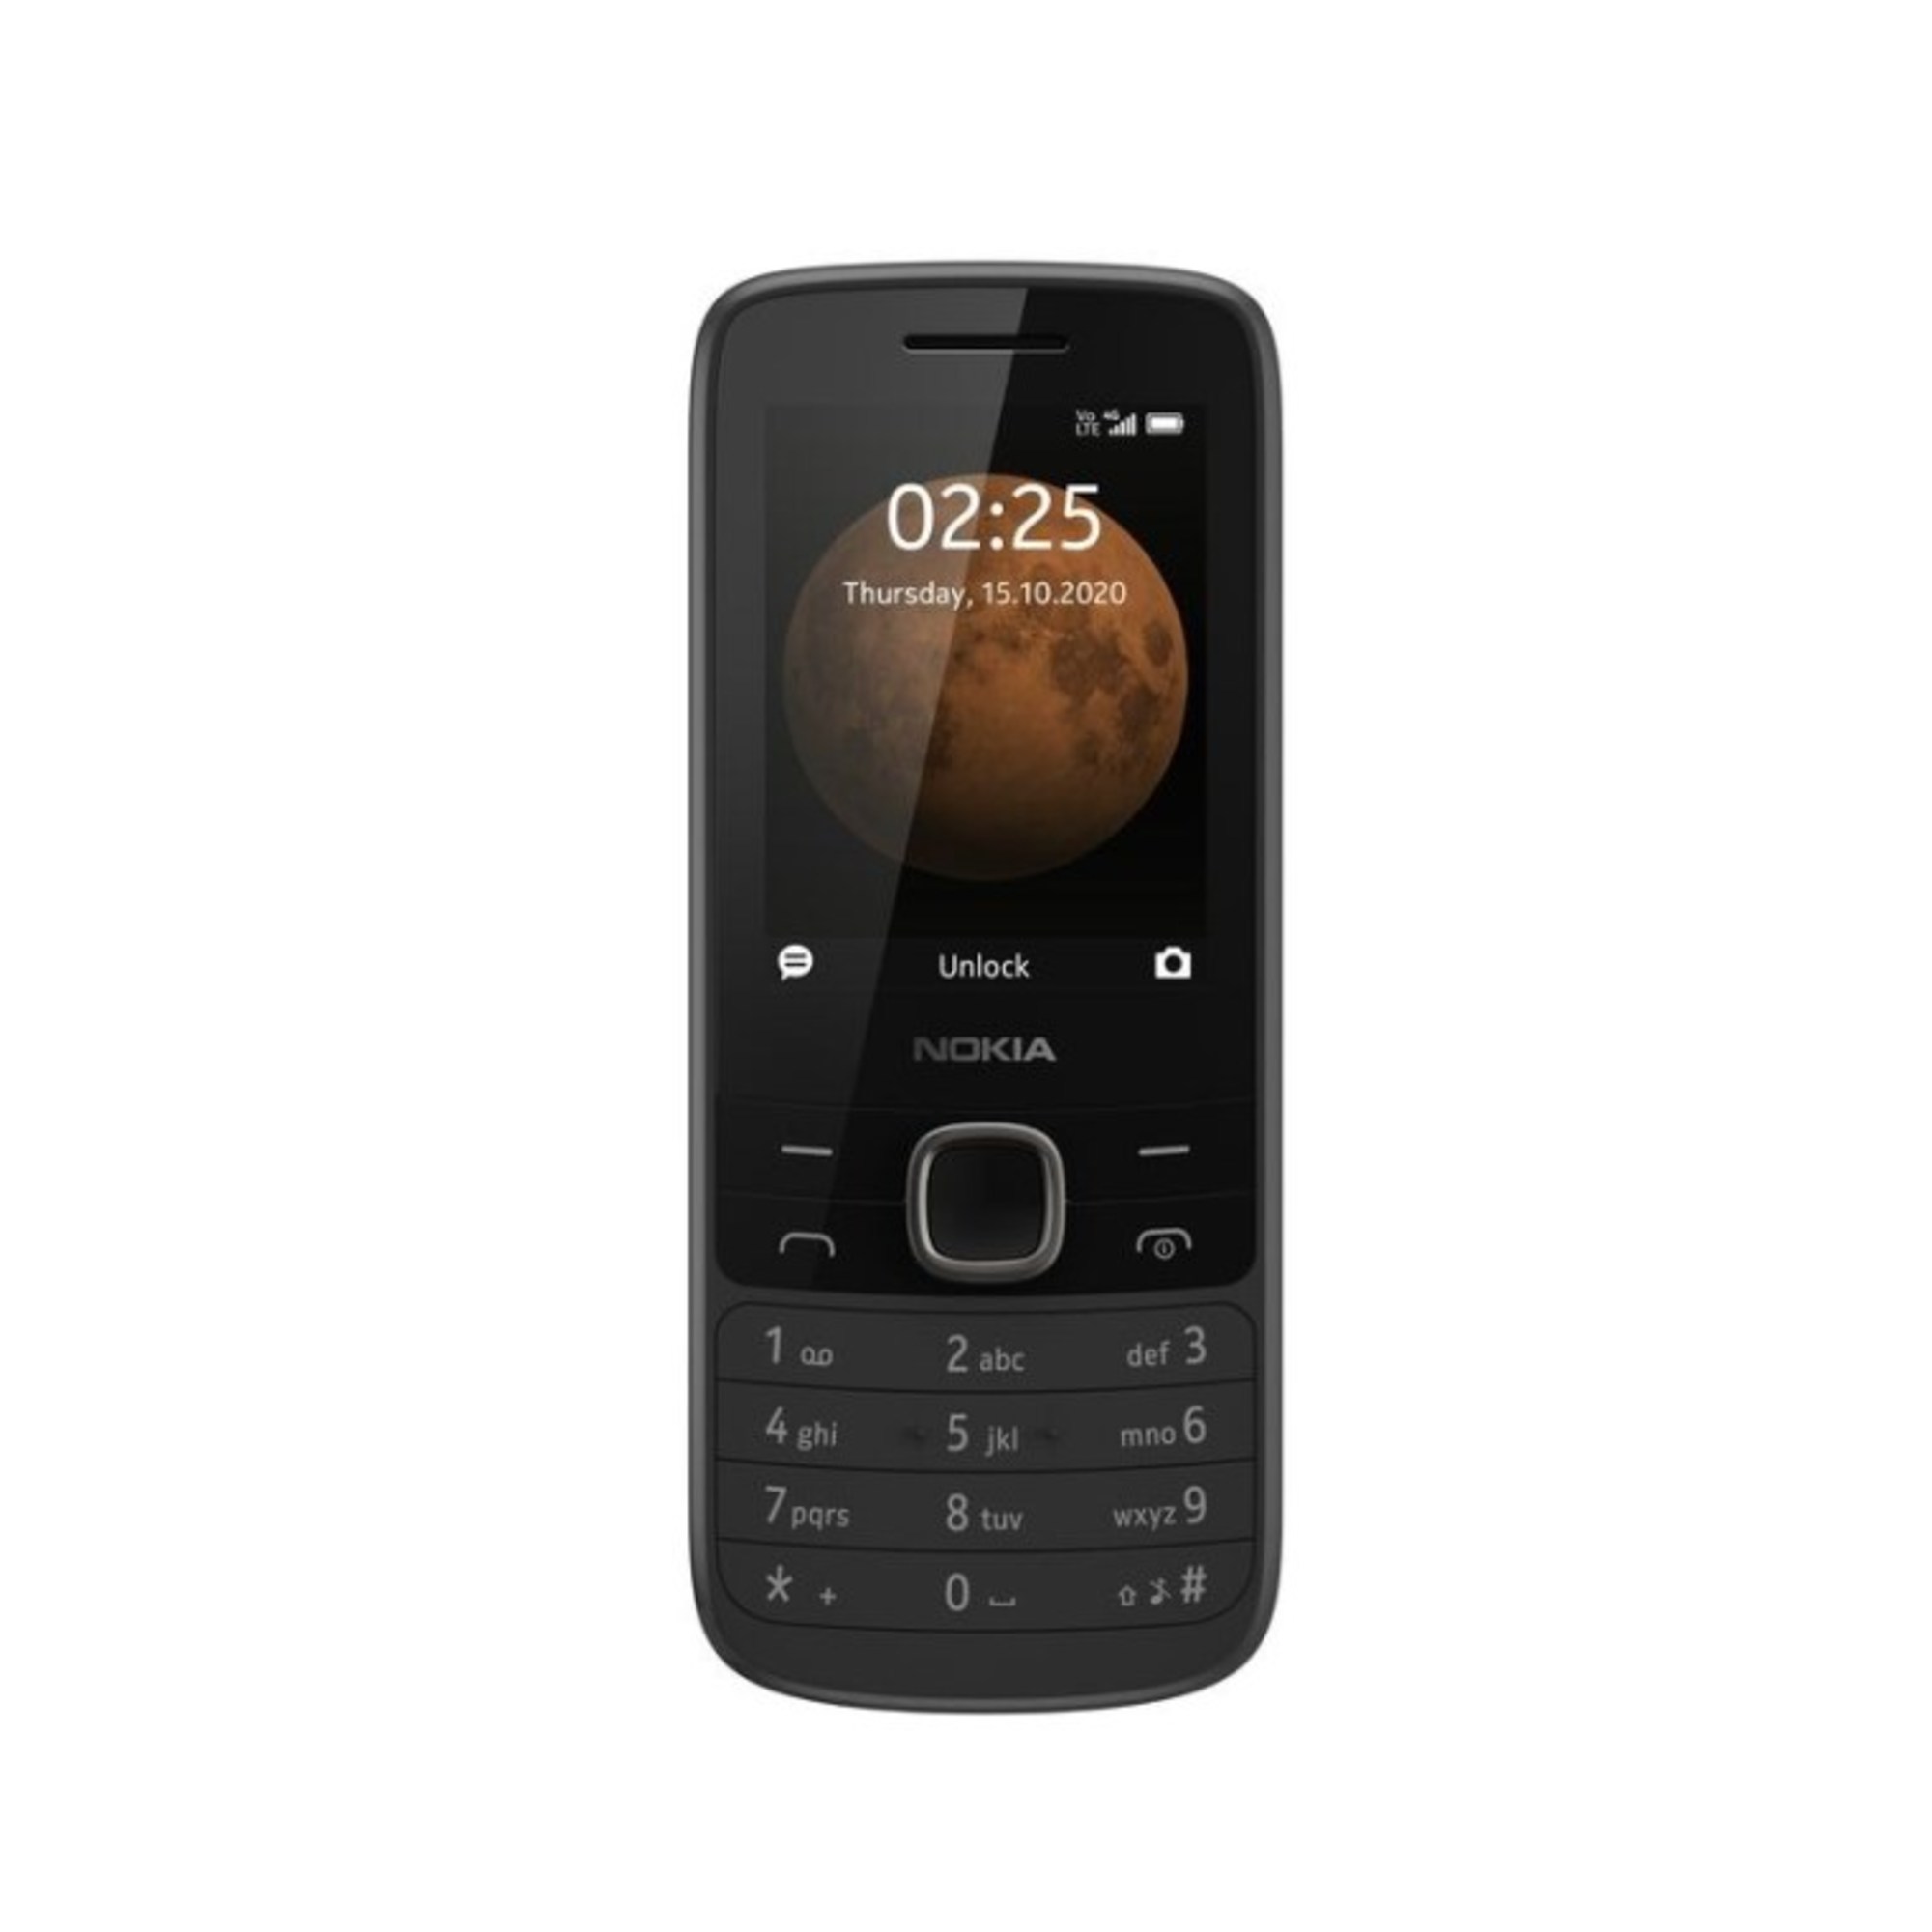 Nokia 225 4G TA-1282 GSM Unlocked Phone, Black - image 1 of 4